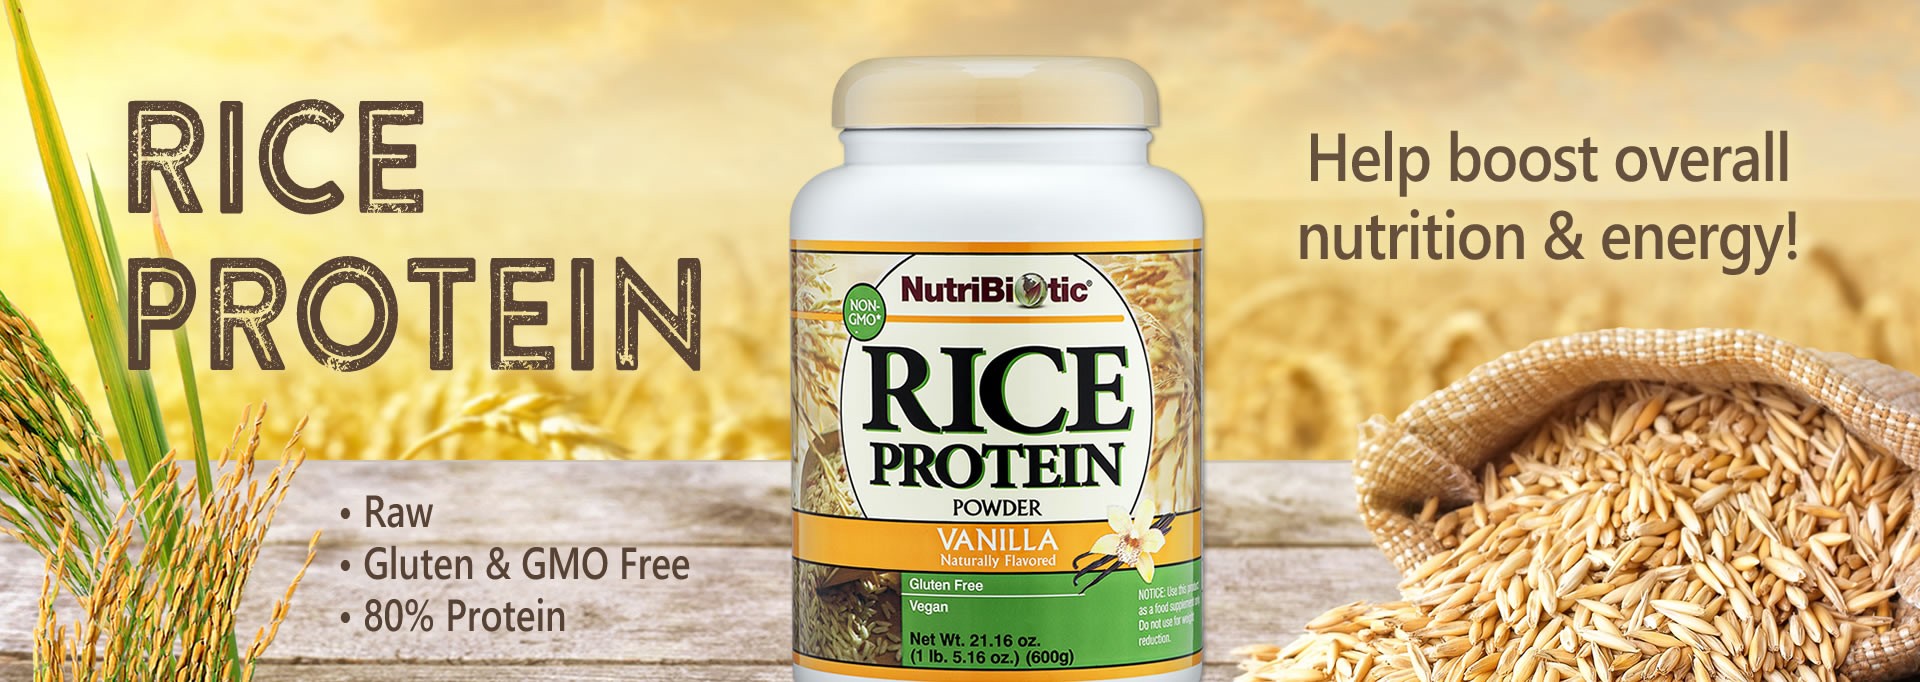 RiceProtein1920x682